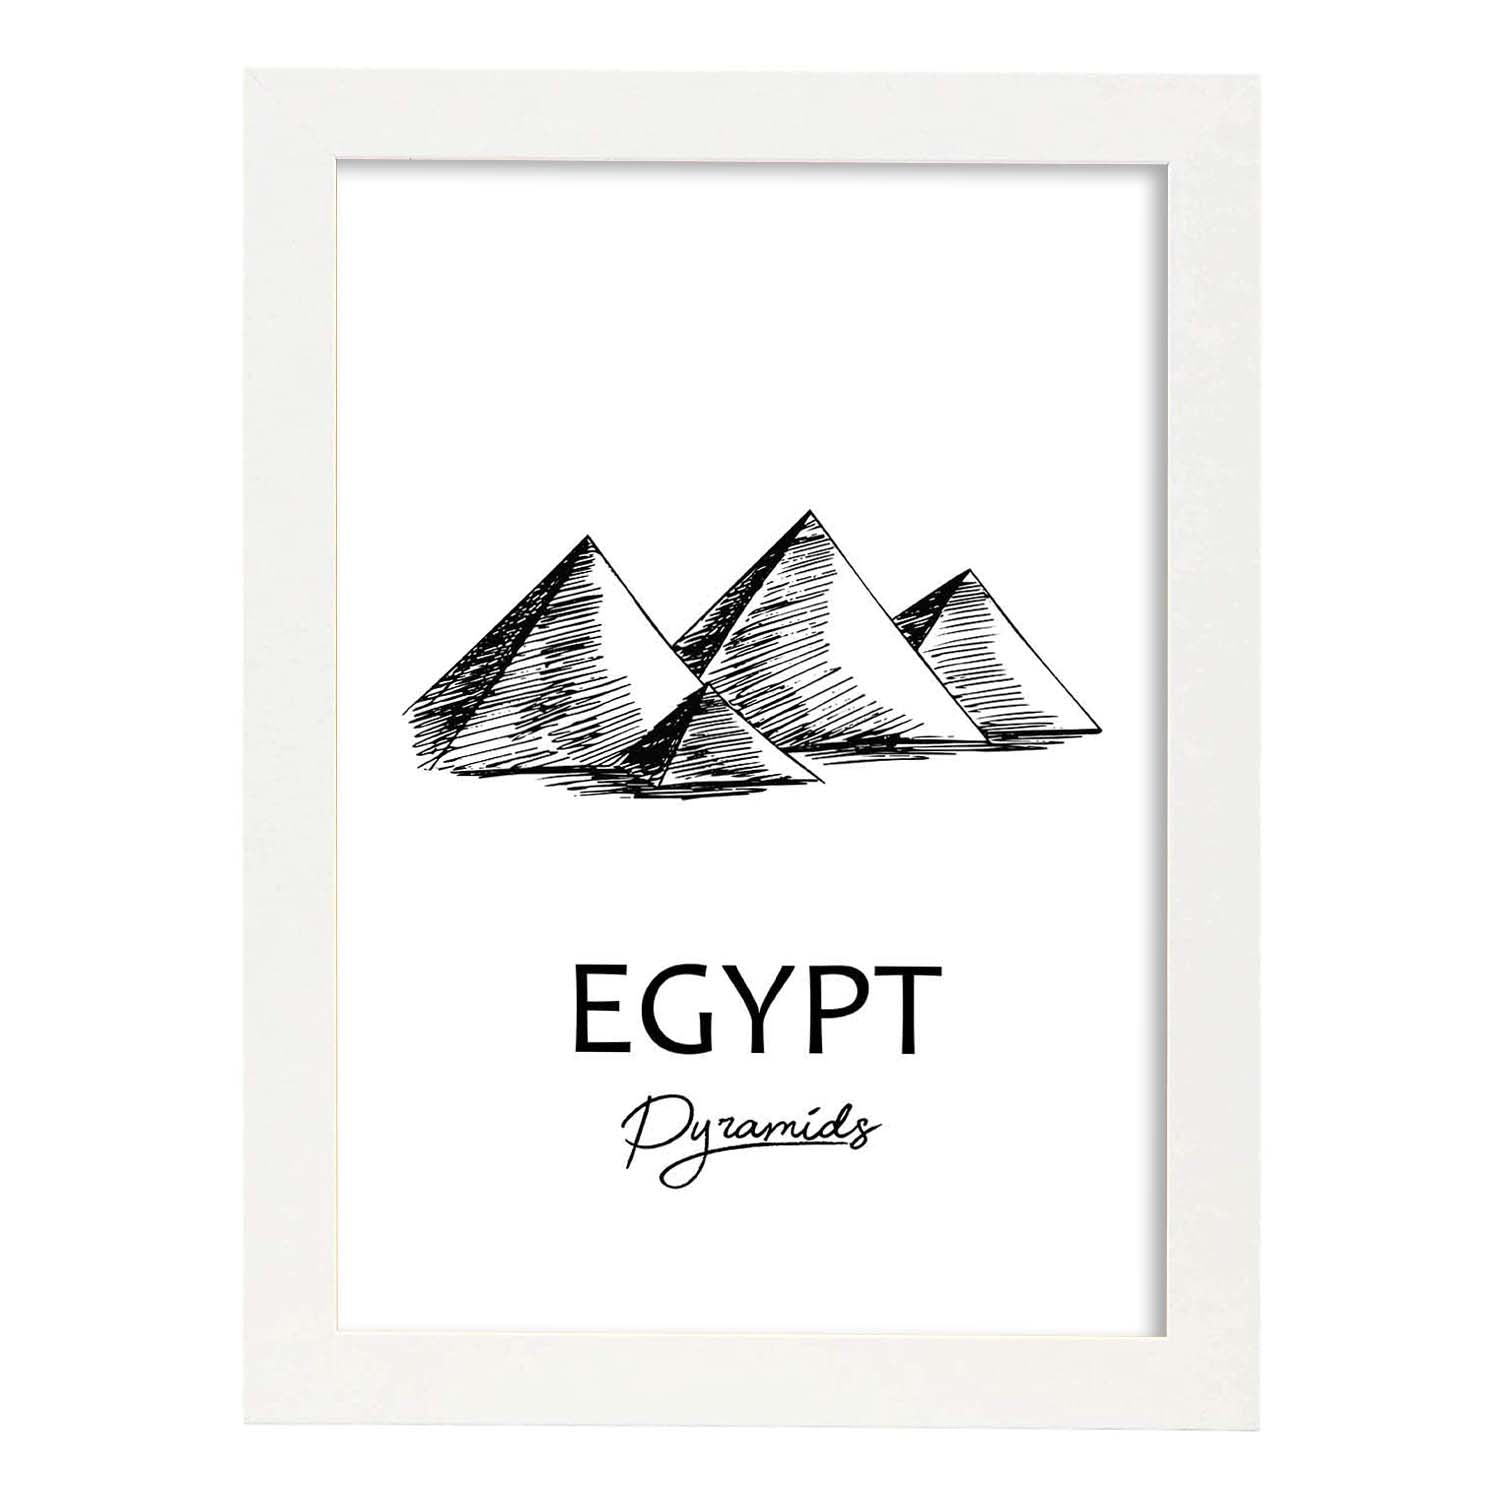 Poster de Egipto - Pirámides. Láminas con monumentos de ciudades.-Artwork-Nacnic-A3-Marco Blanco-Nacnic Estudio SL